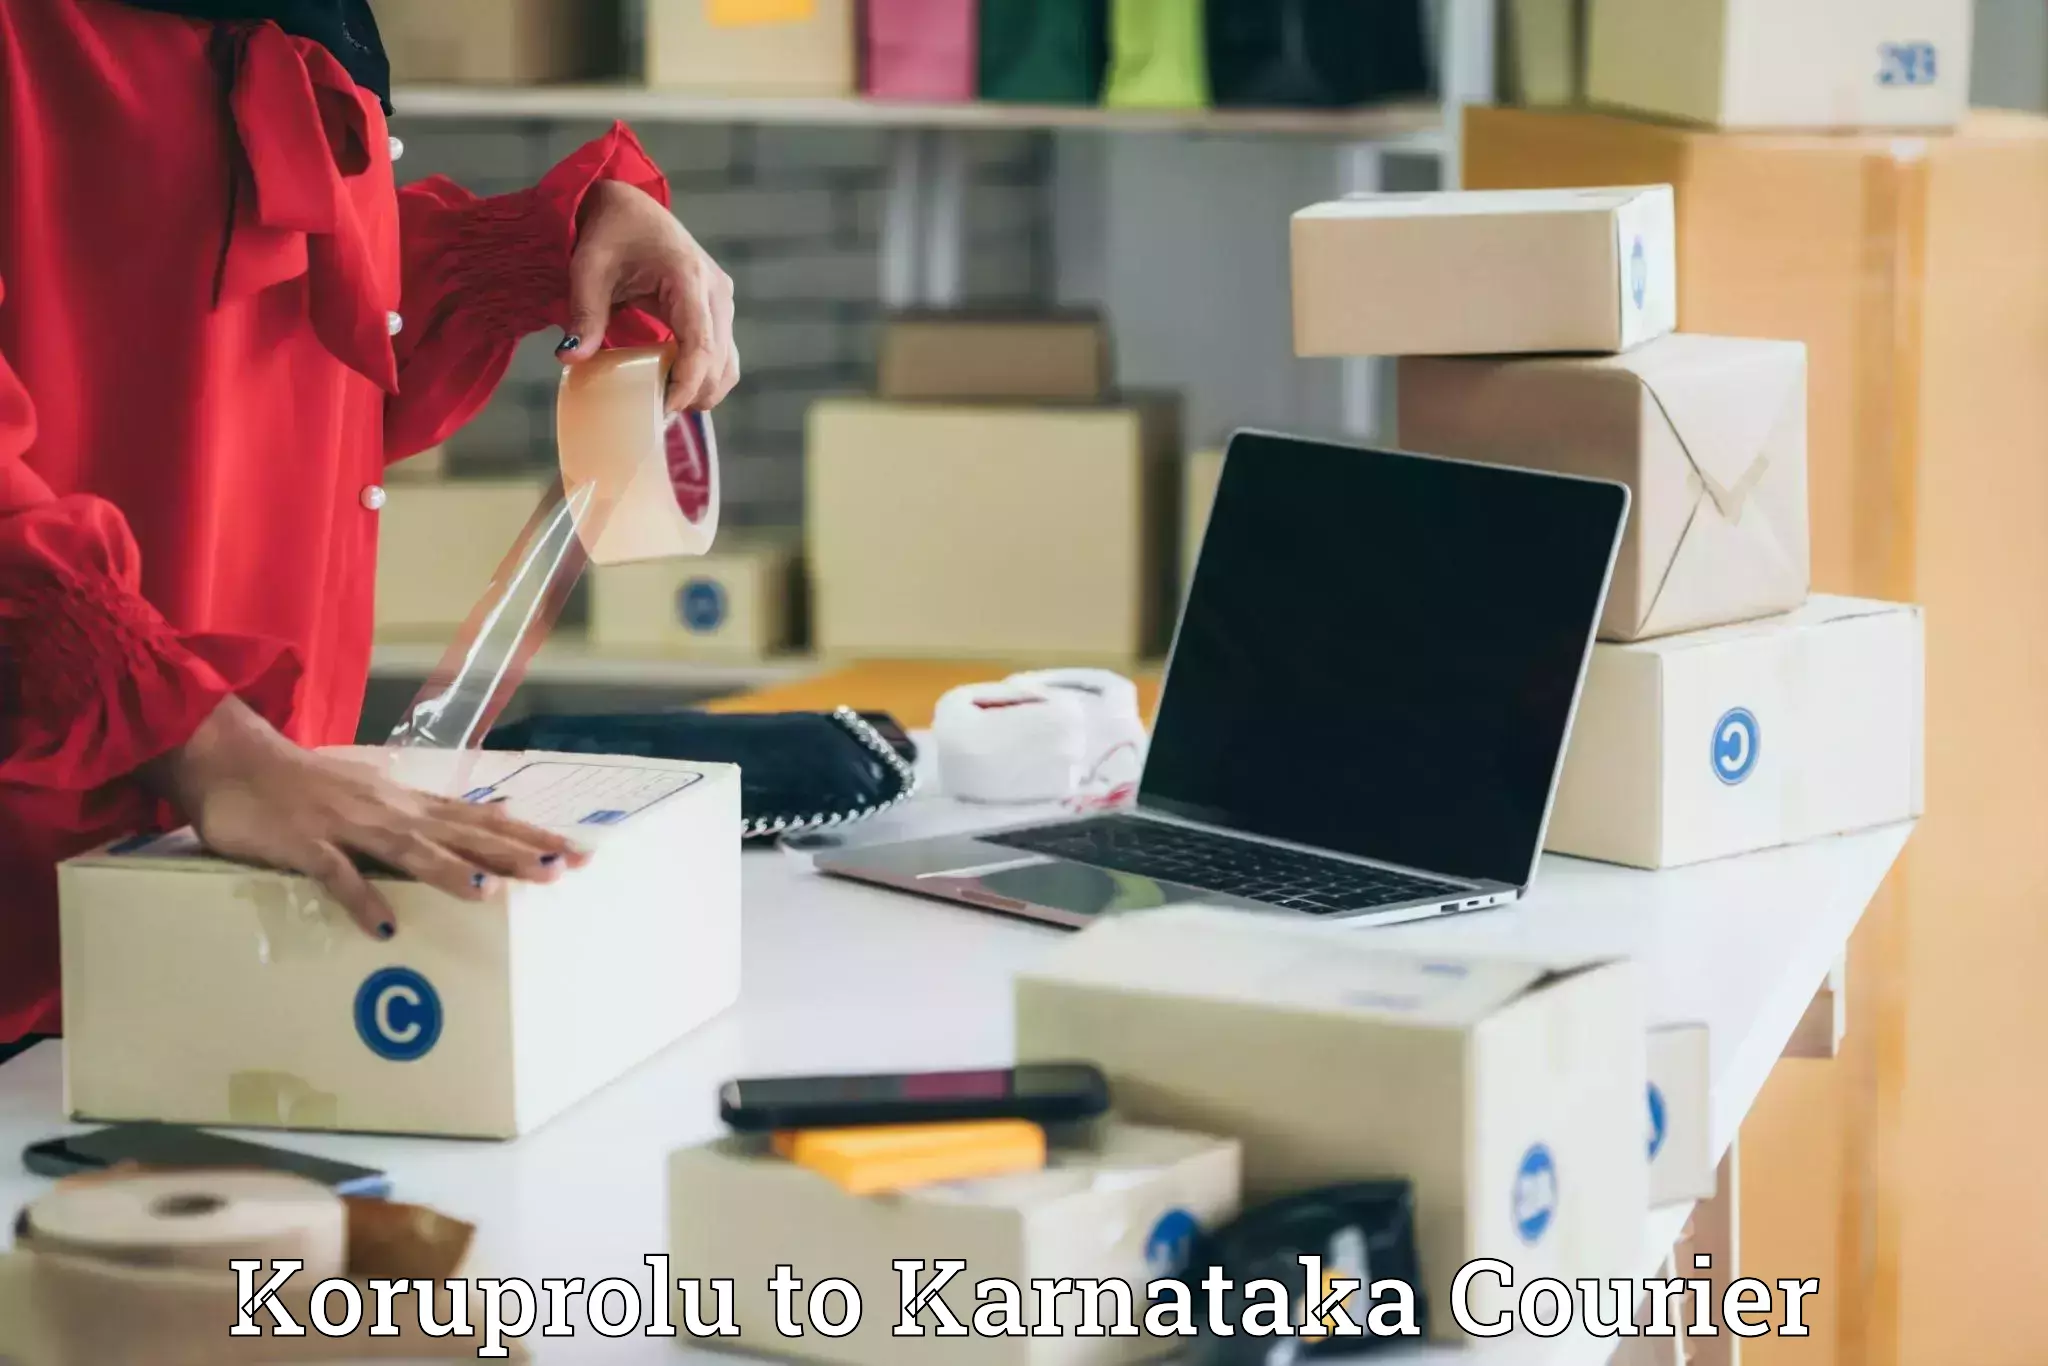 Courier service innovation Koruprolu to Karnataka